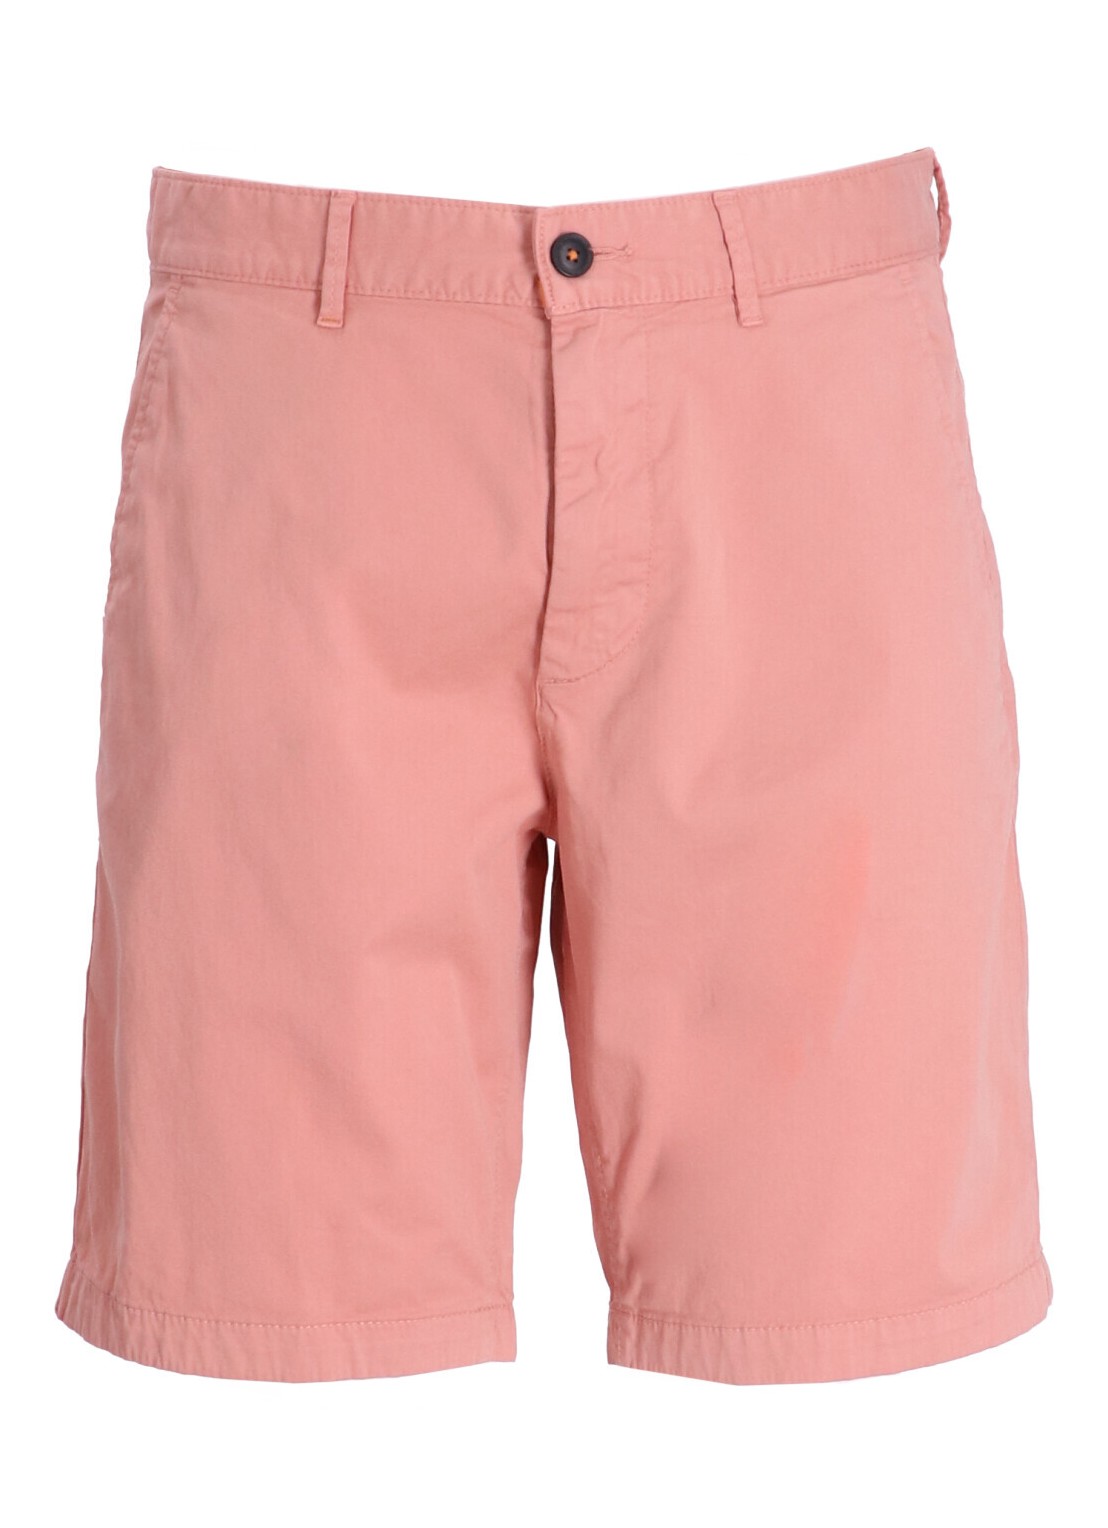 Pantalon corto boss short pant manchino-slim-shorts - 50513026 695 talla 32
 